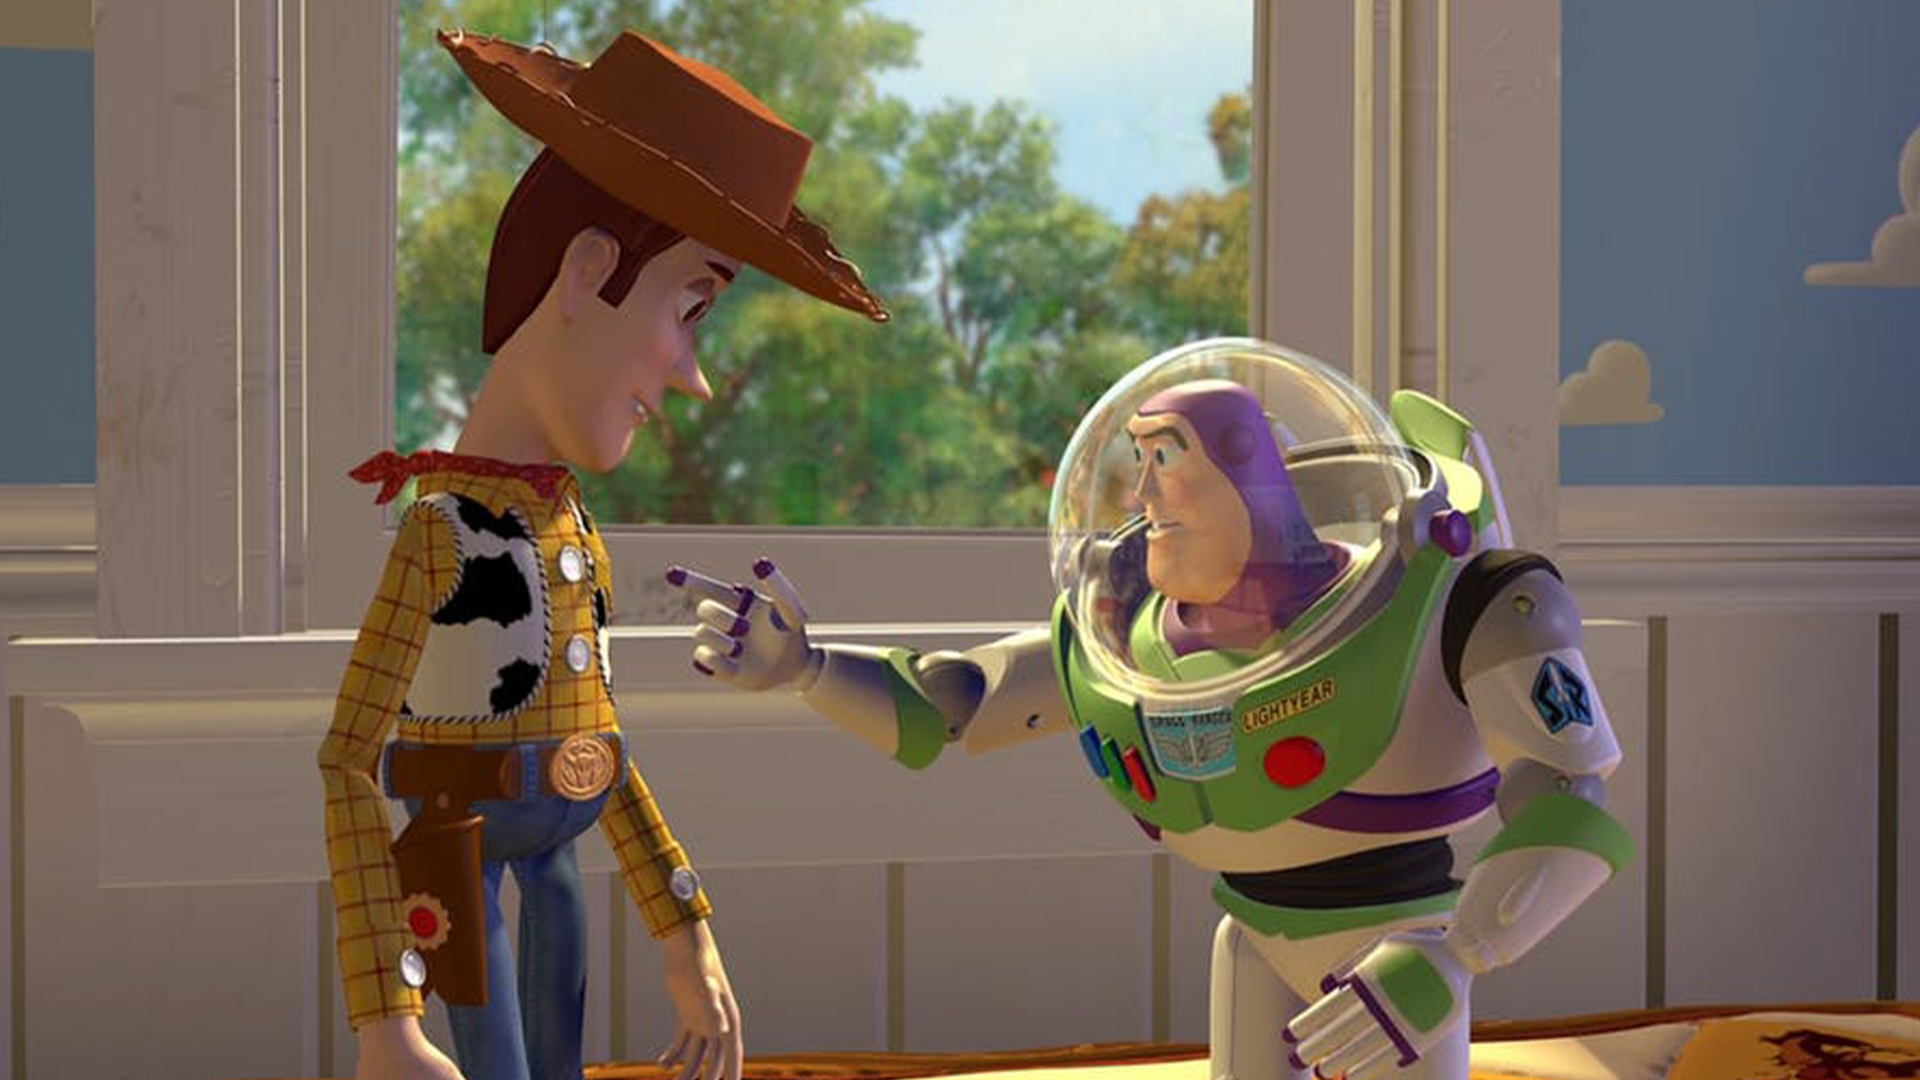 Toy Story | Pixar | Bonnie Arnold
Ralph Guggenheim | John Lasseter